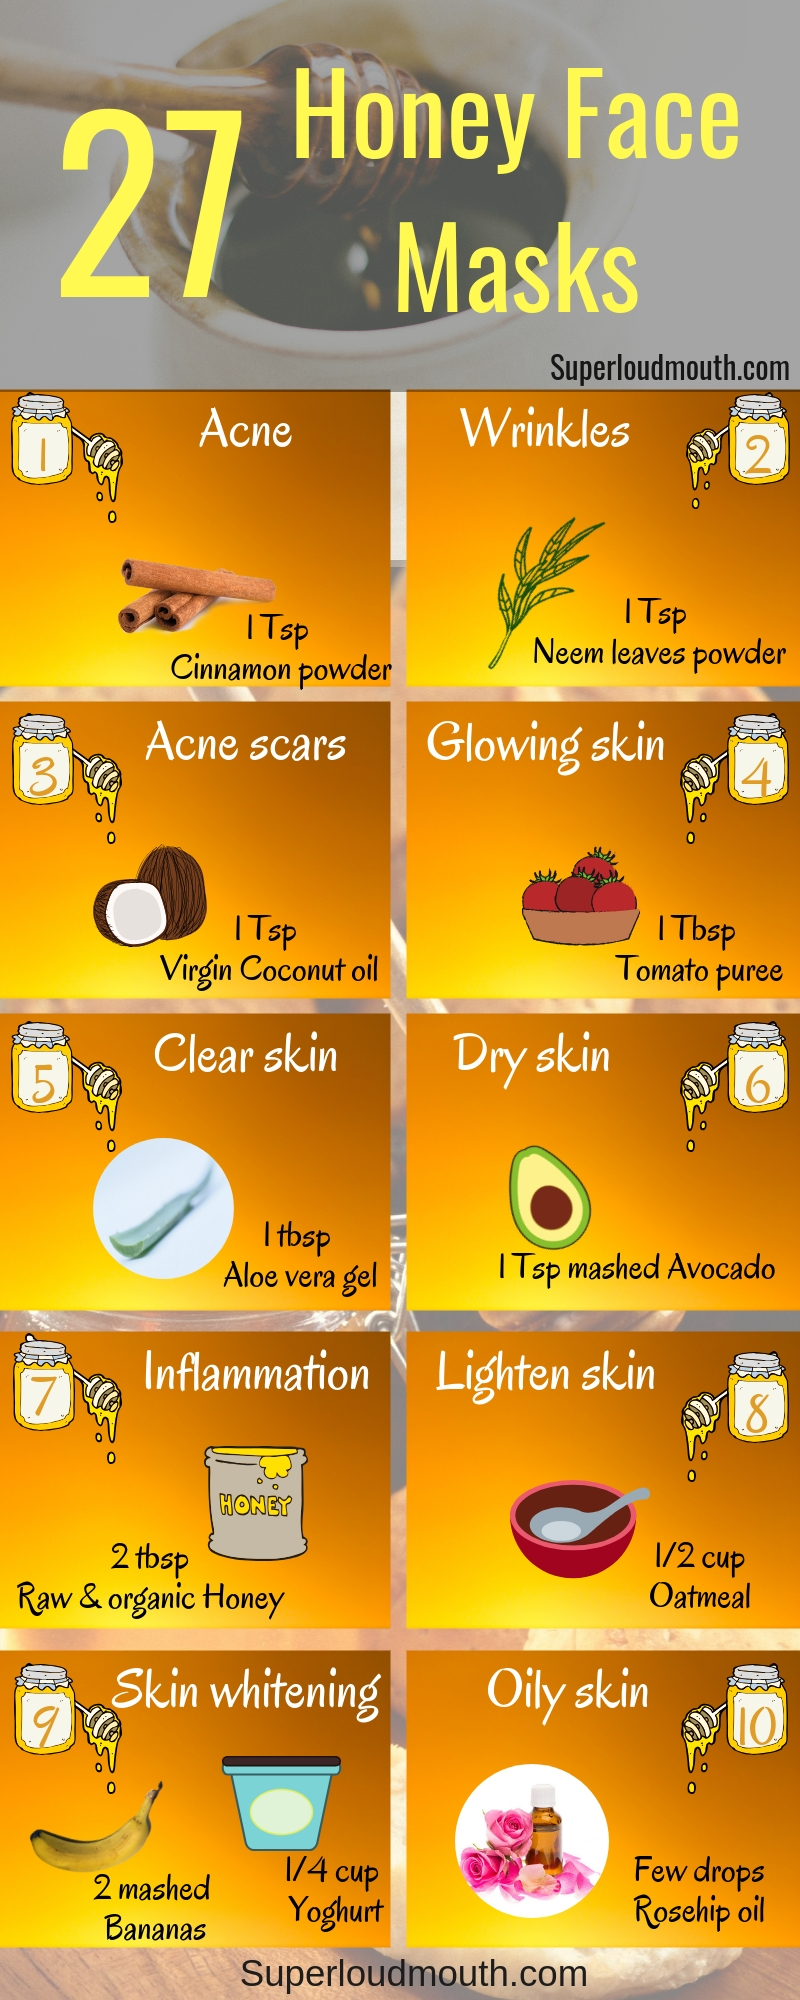 27 honey face masks for all skin problems